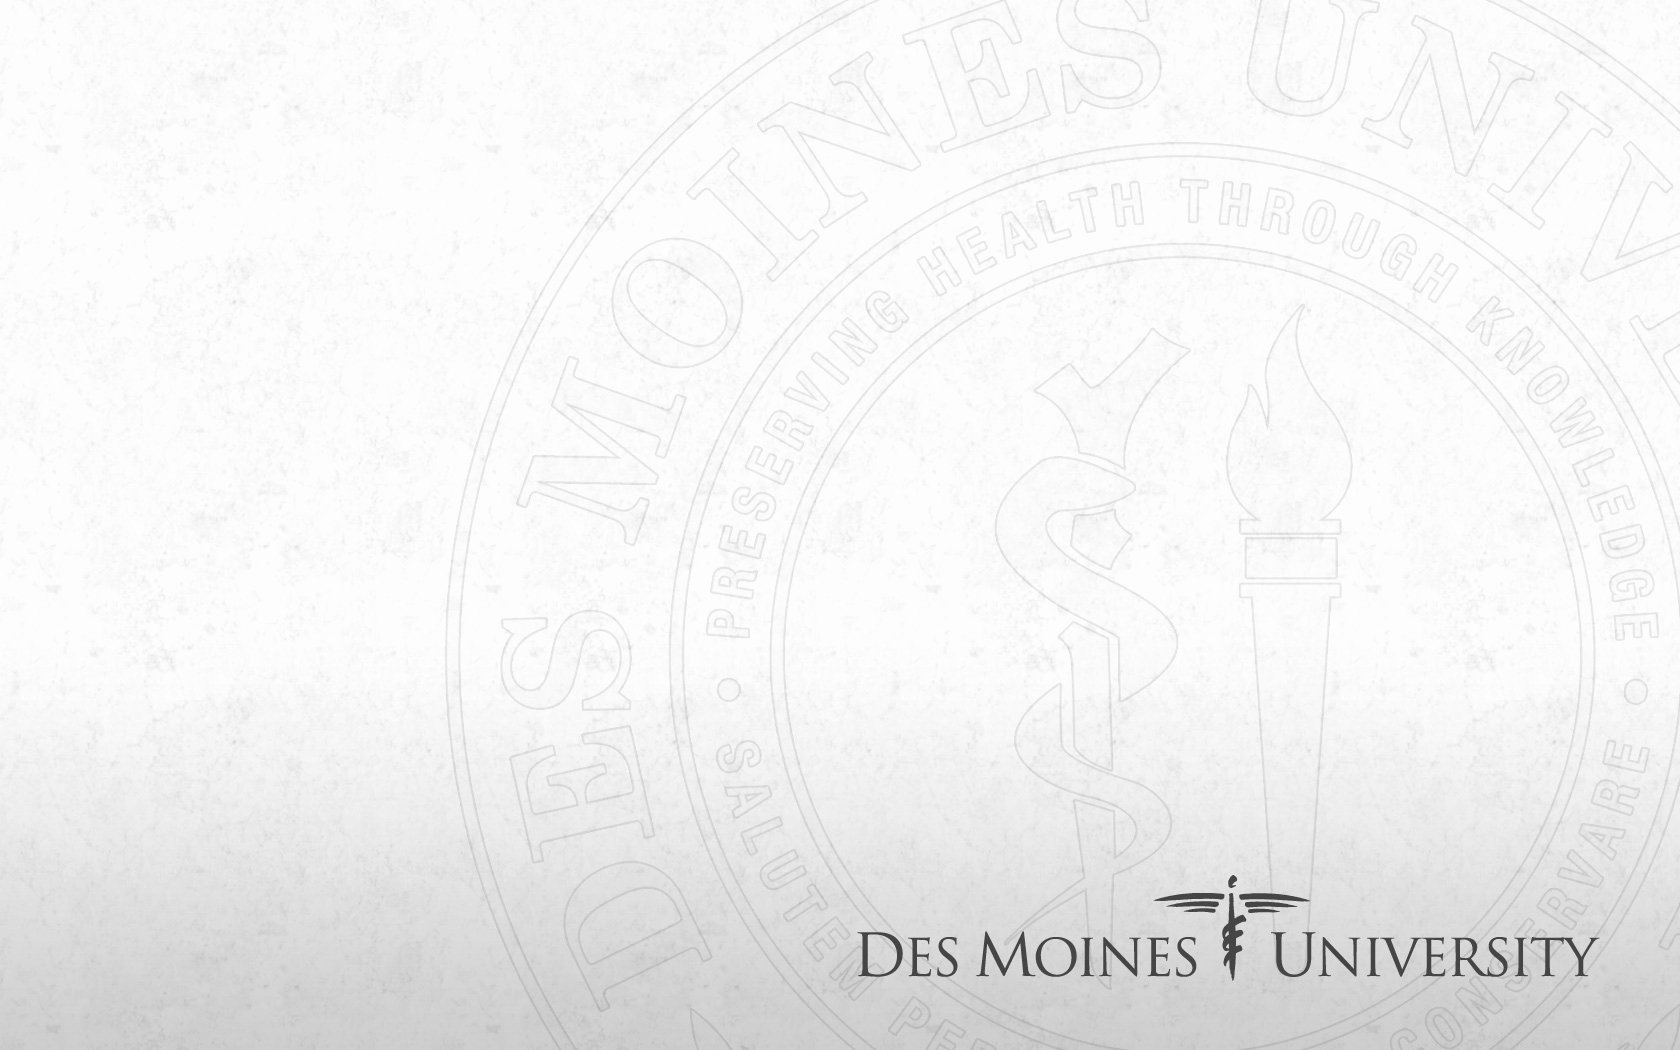 Official Seal Template Unique Templates and Resources Des Moines University